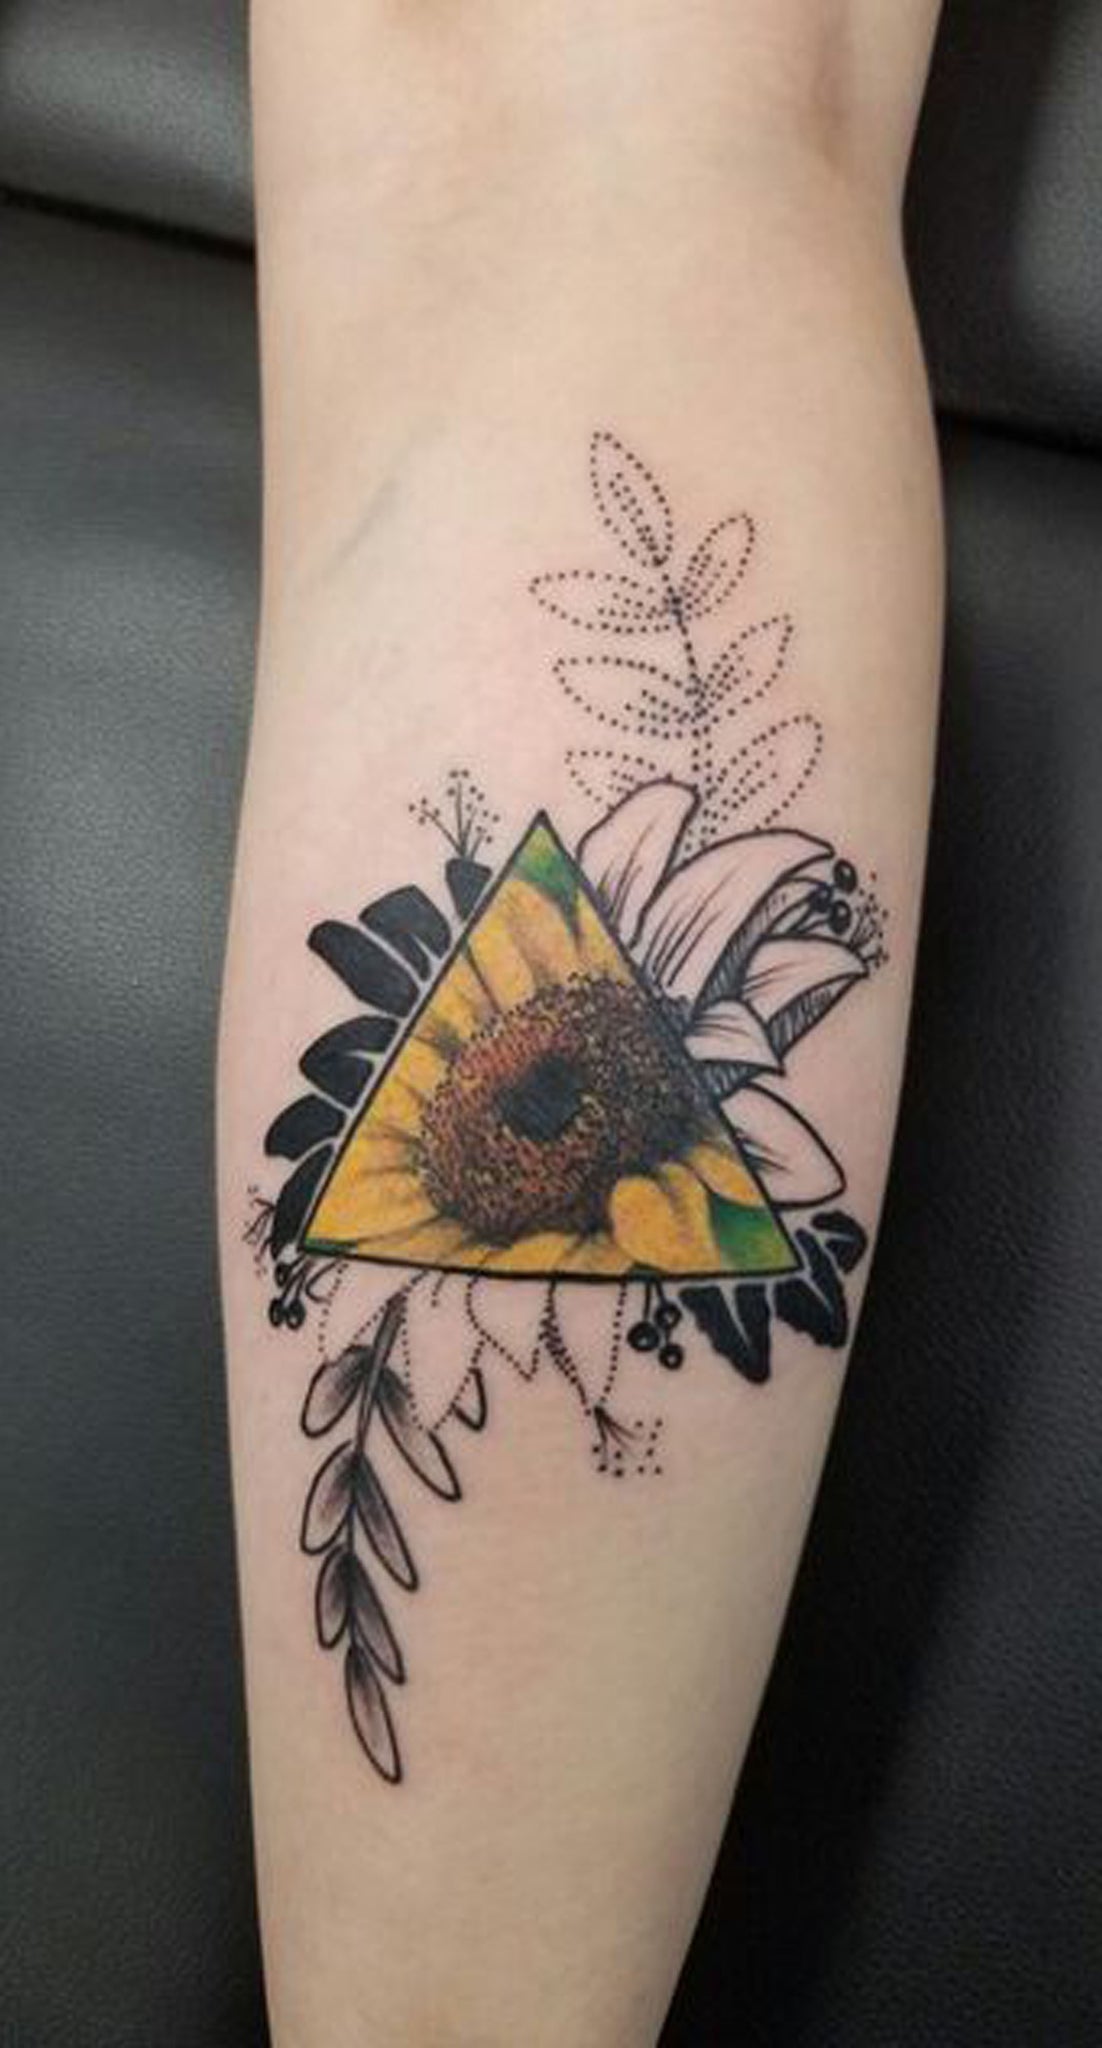 Of The Most Boujee Sunflower Tattoo Ideas Mybodiart